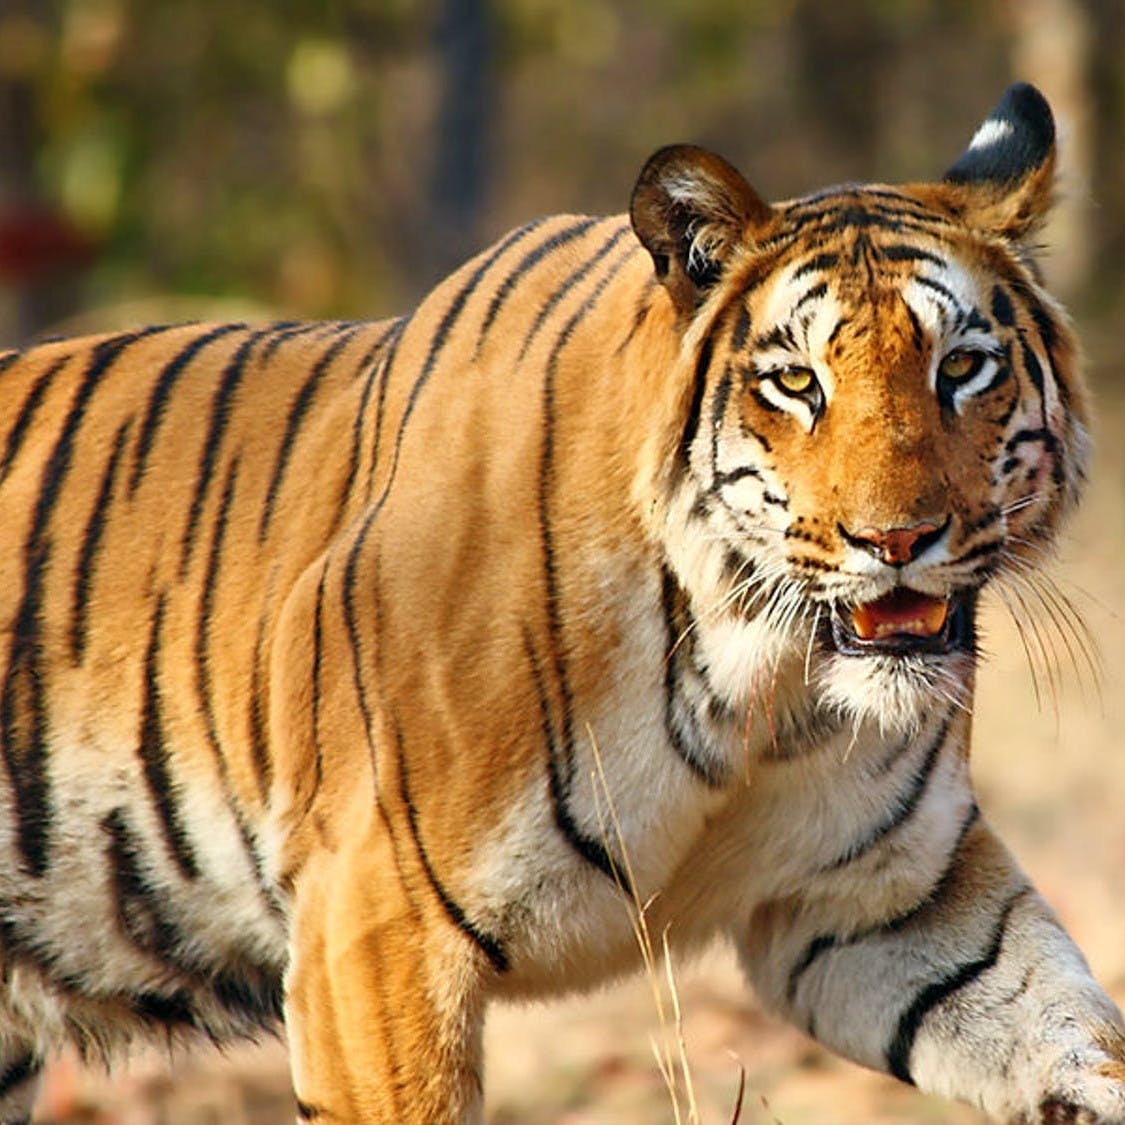 Tiger,Nature,Bengal tiger,Natural environment,Skin,Carnivore,Organism,Siberian tiger,Vertebrate,Whiskers